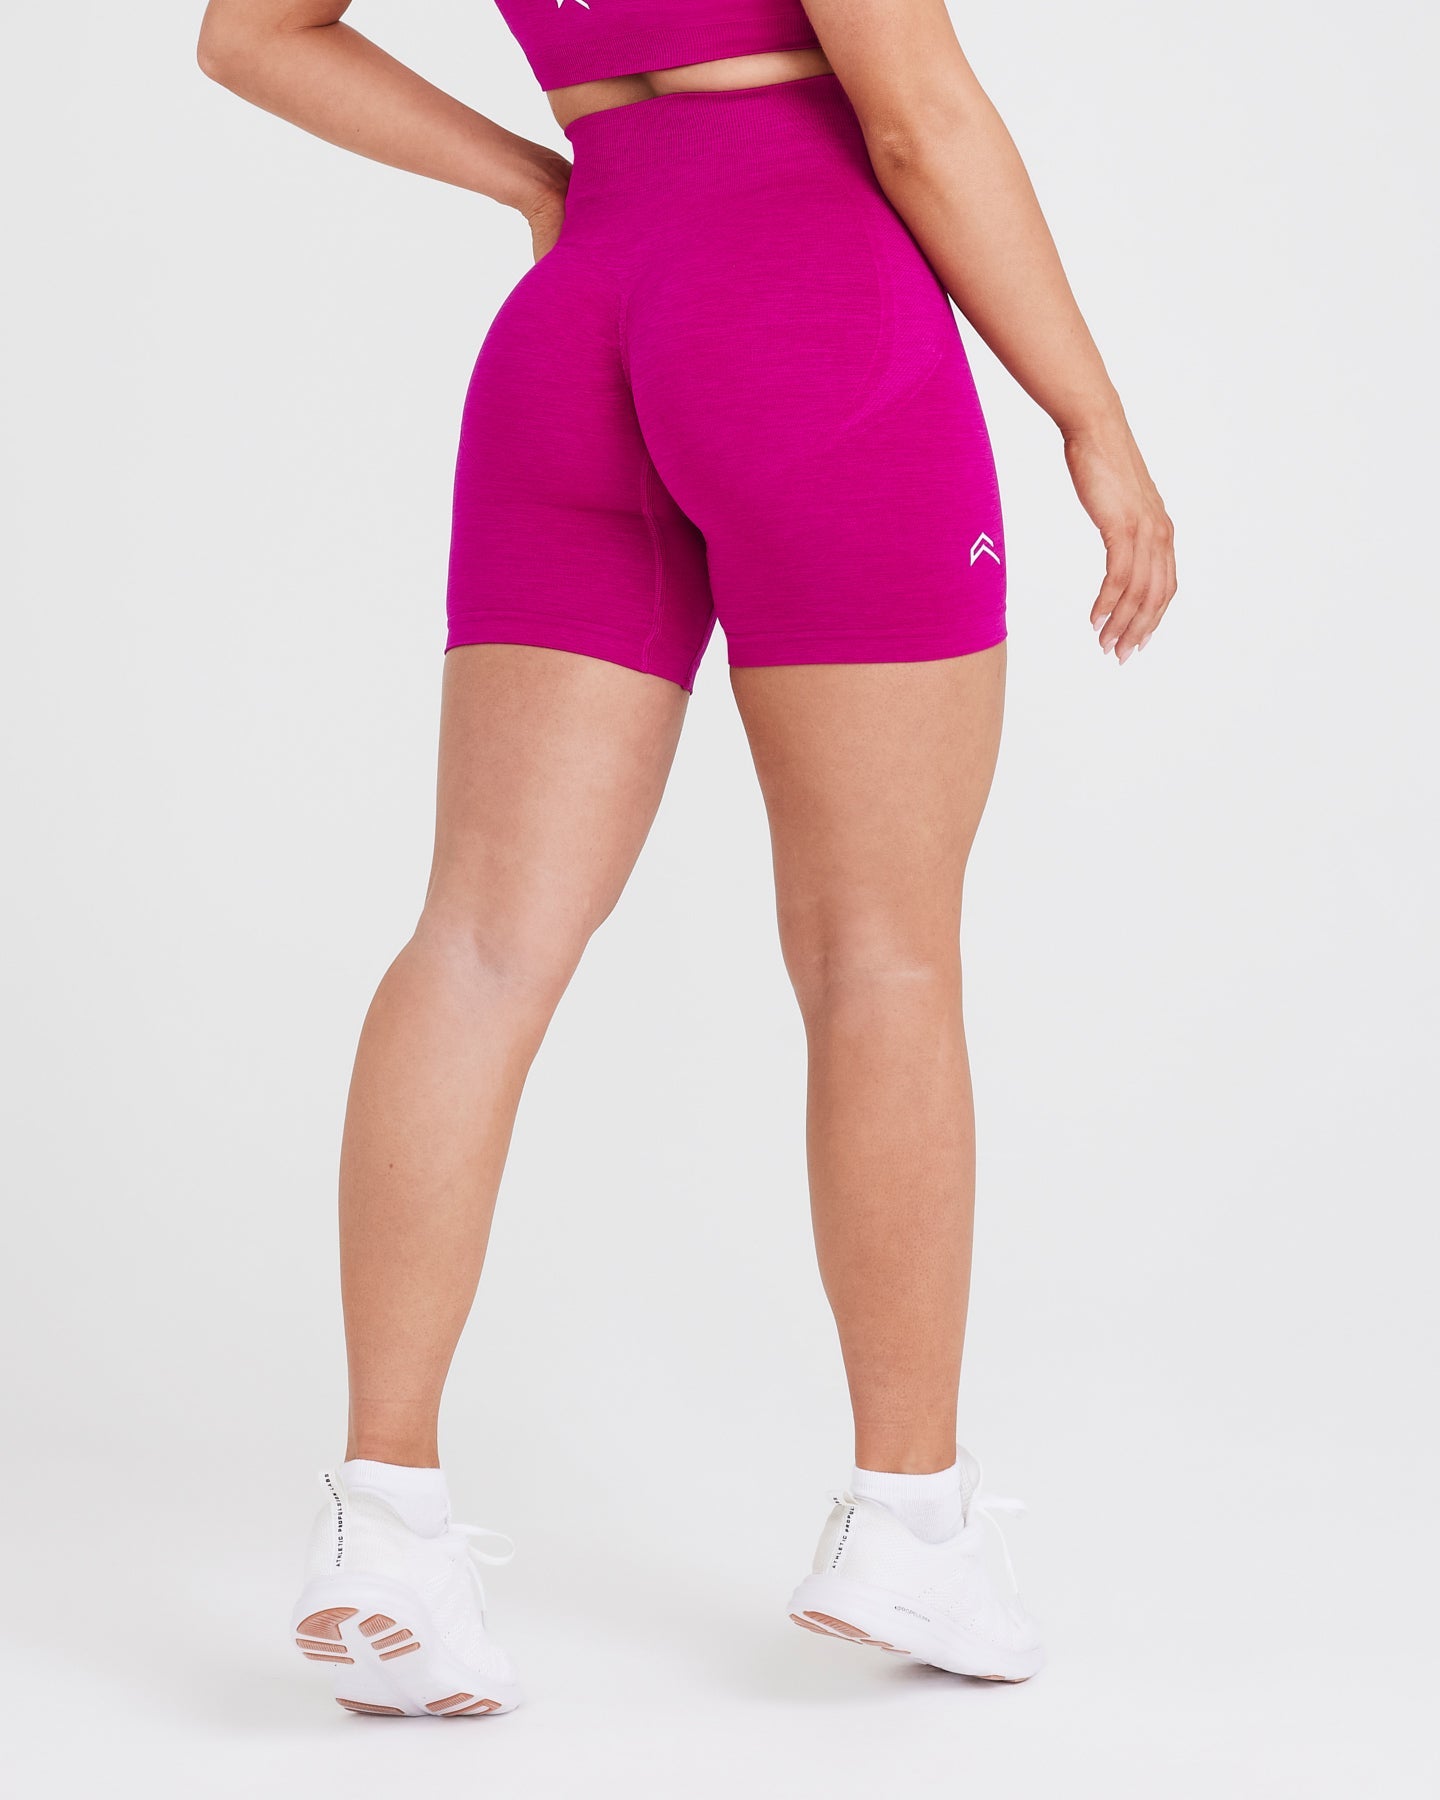 Pink High Waisted Shorts - Women's - Fuchsia | Oner Active US